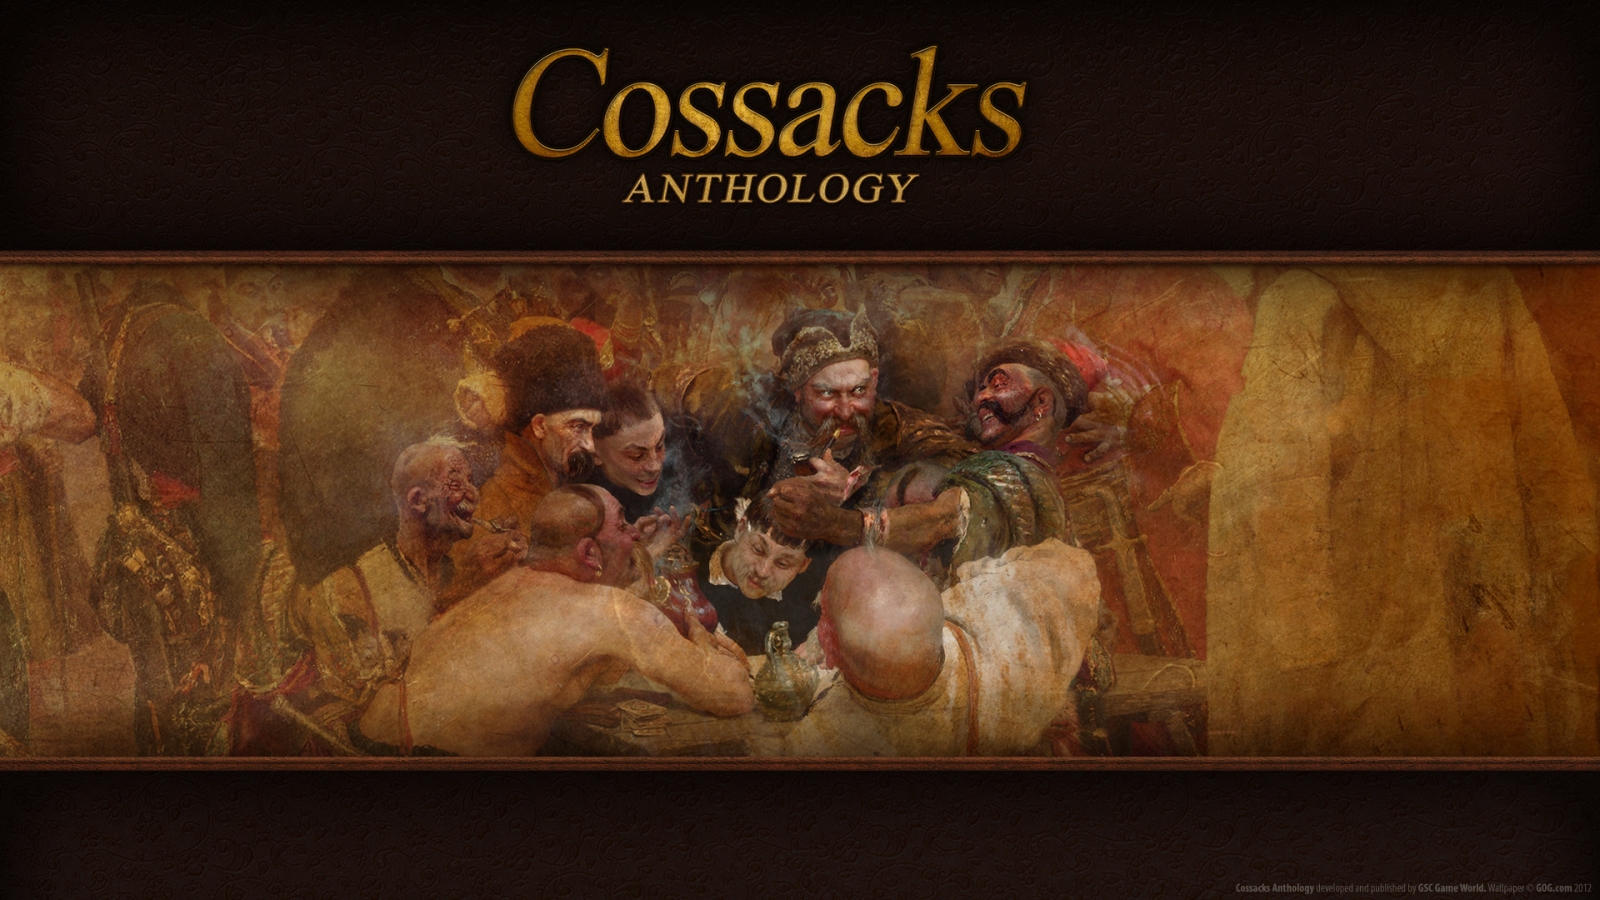 Cossacks Anthology for 1600 x 900 HDTV resolution